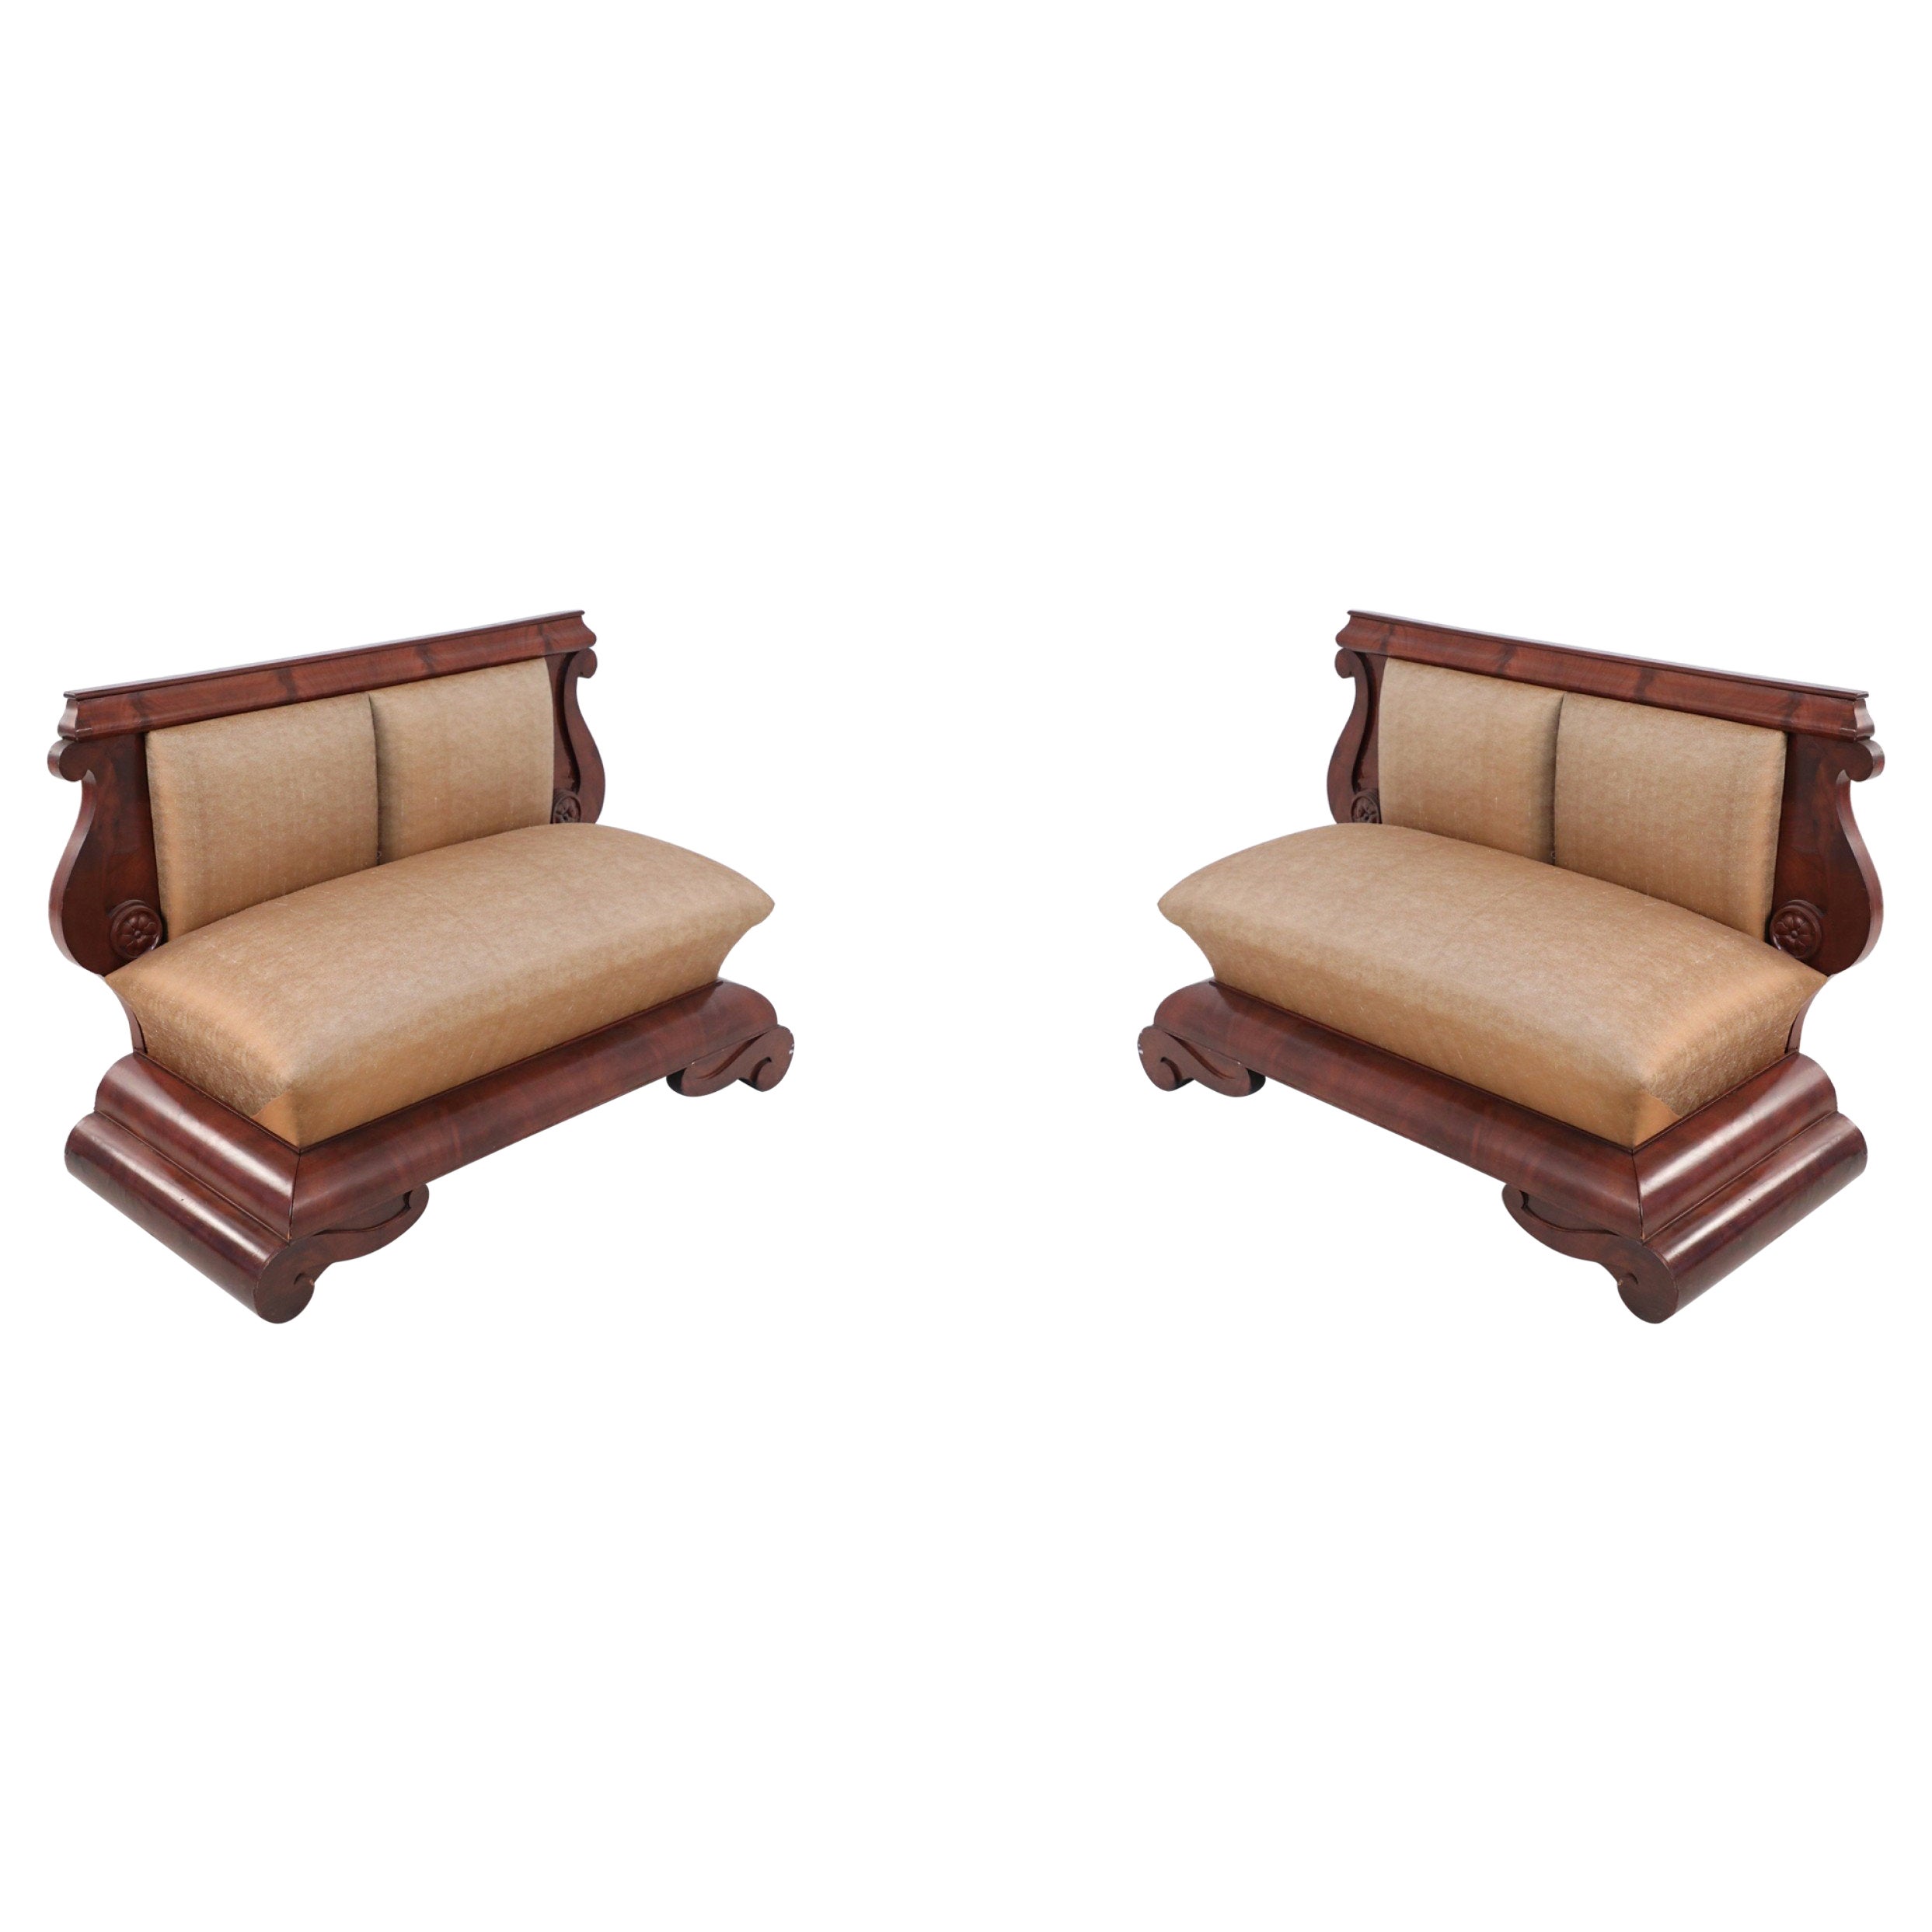 Pair of American Empire Crotch Mahogany Veneer Upholstered Window Seats